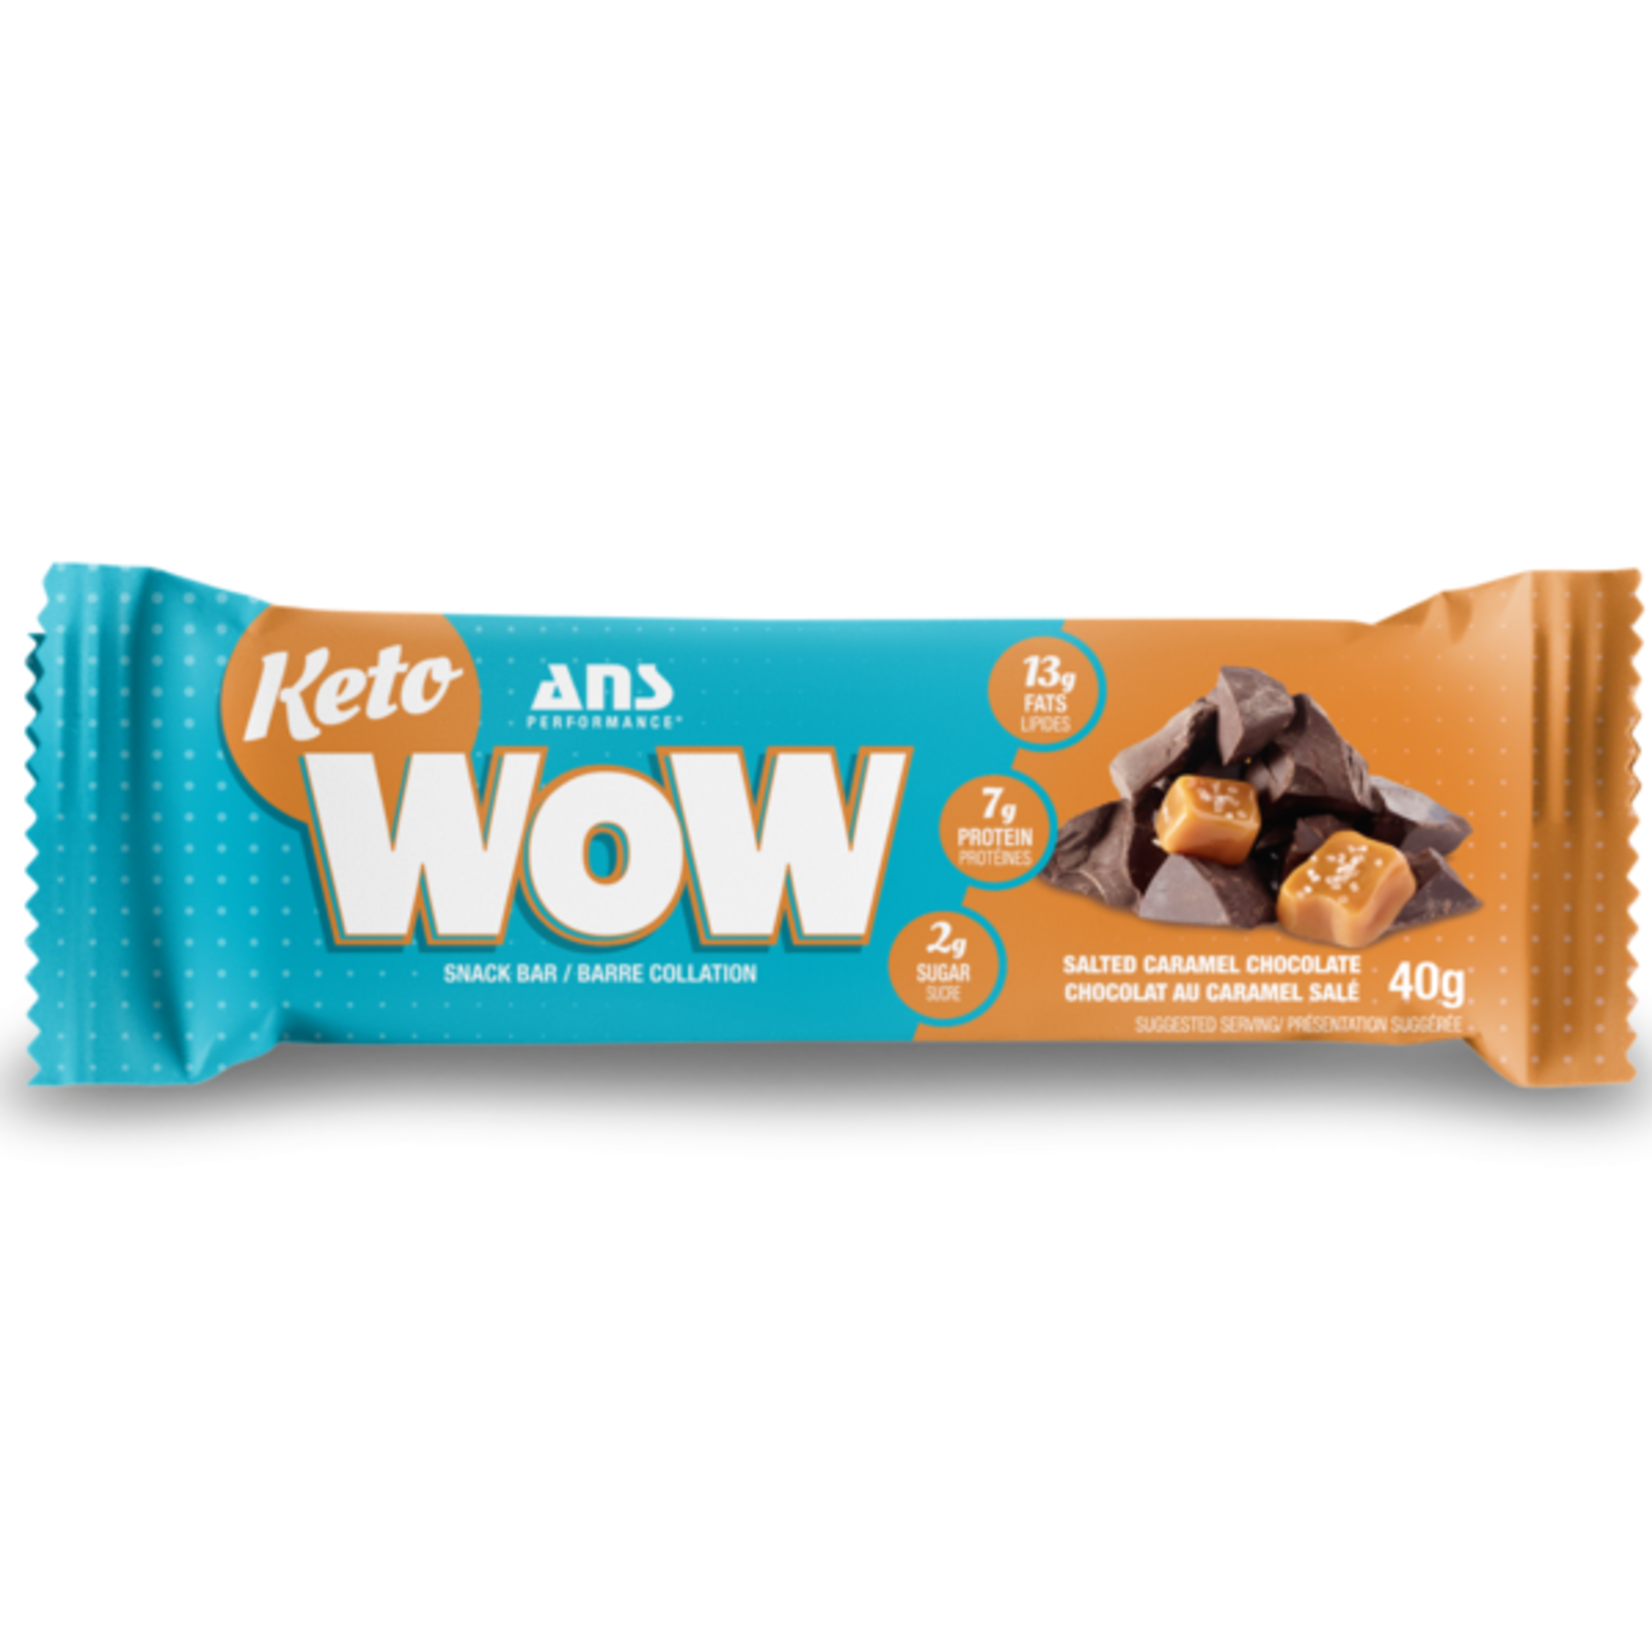 ANS ANS Keto WOW Salted Caramel Chocolate Bar